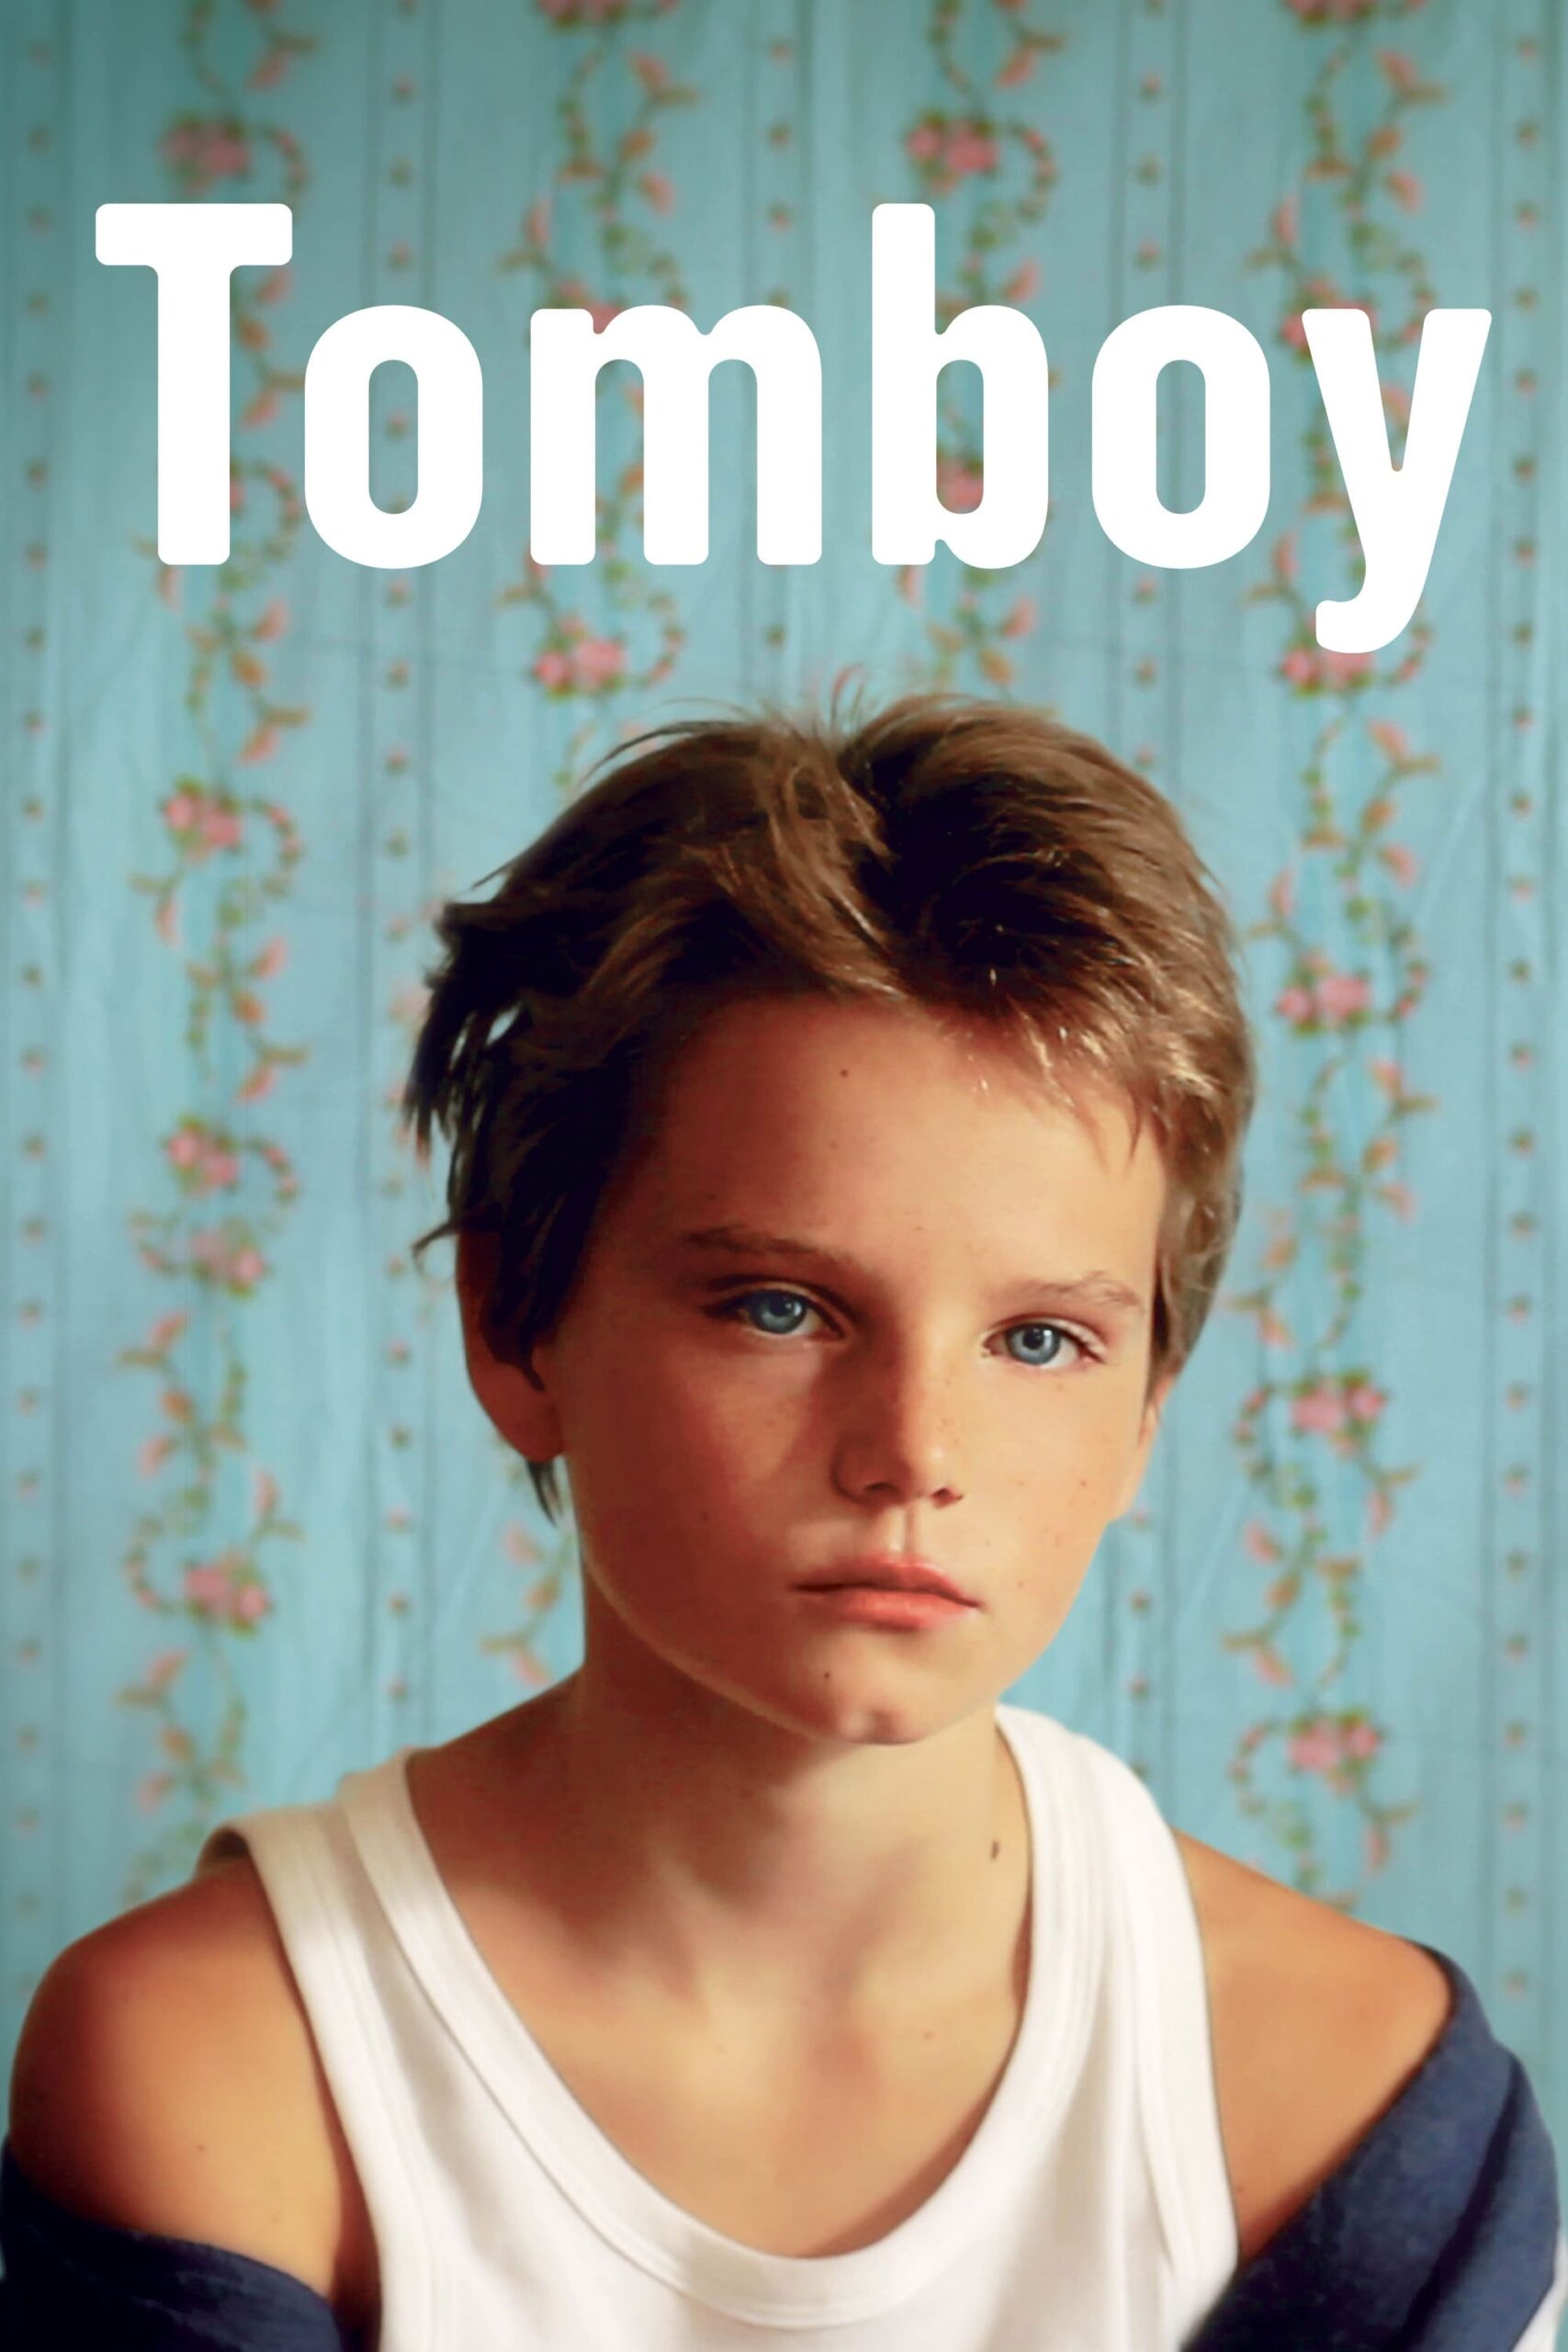 Affiche du film "Tomboy"